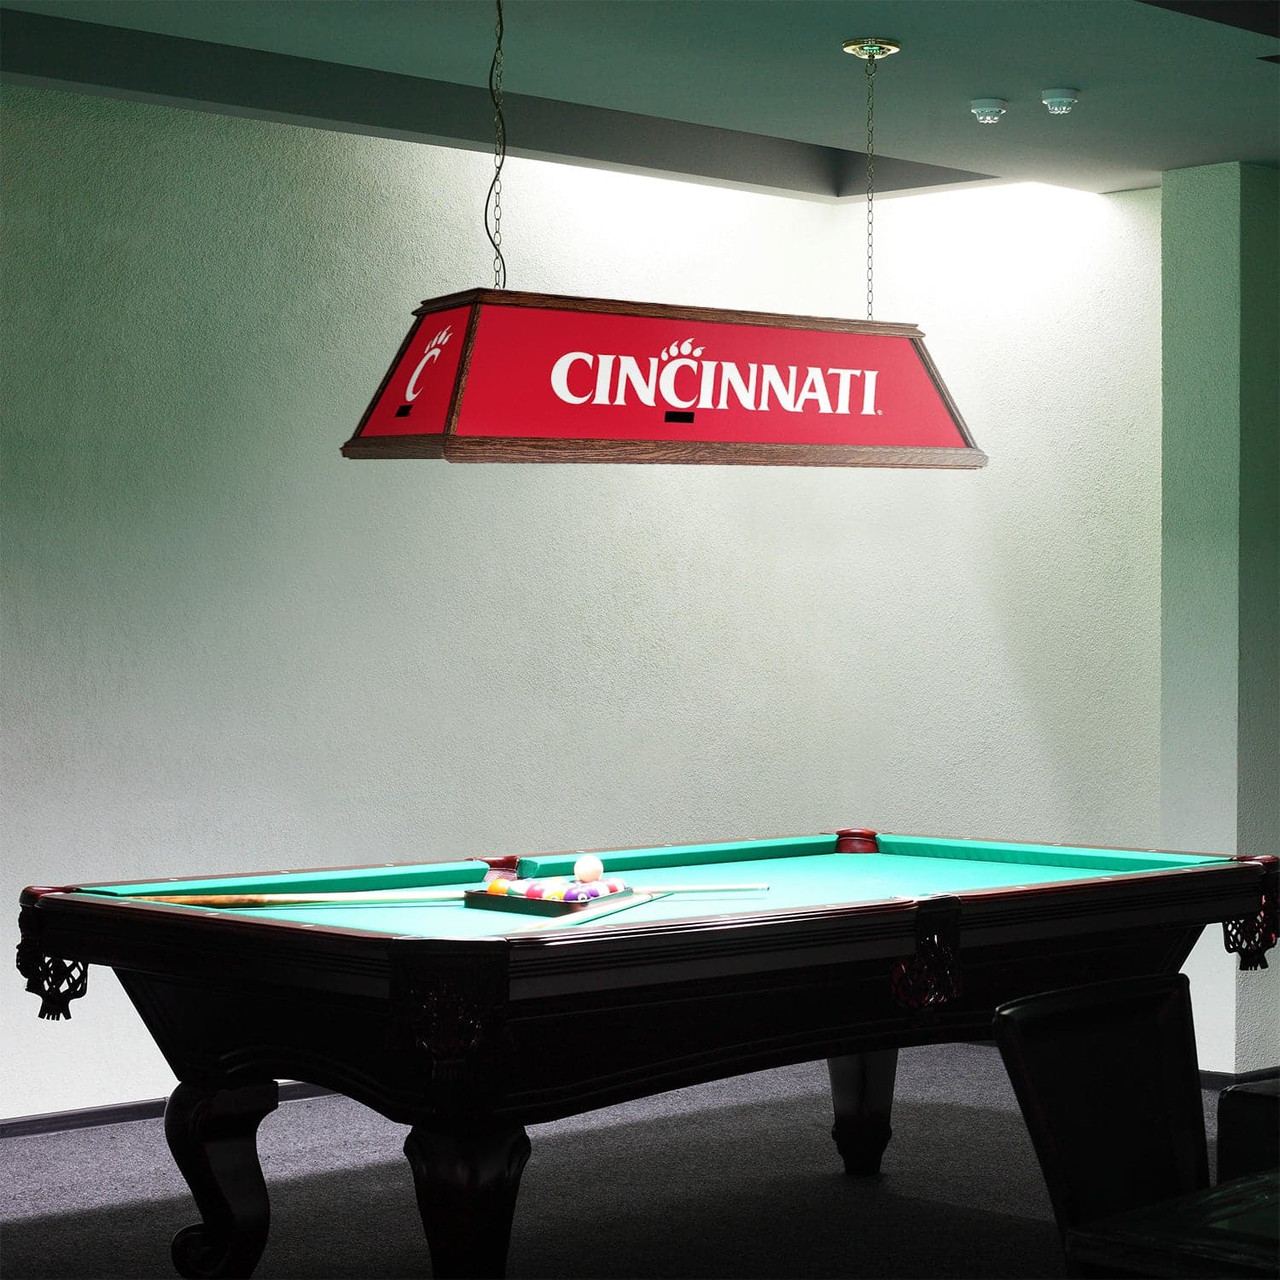 Cincinnati, Bearcats, Premium, Wood, Billiard, Pool, Table, Light, Lamp, NCCINC-330-01A, NCCINC-330-01B, The Fan-Brand, 688187934556